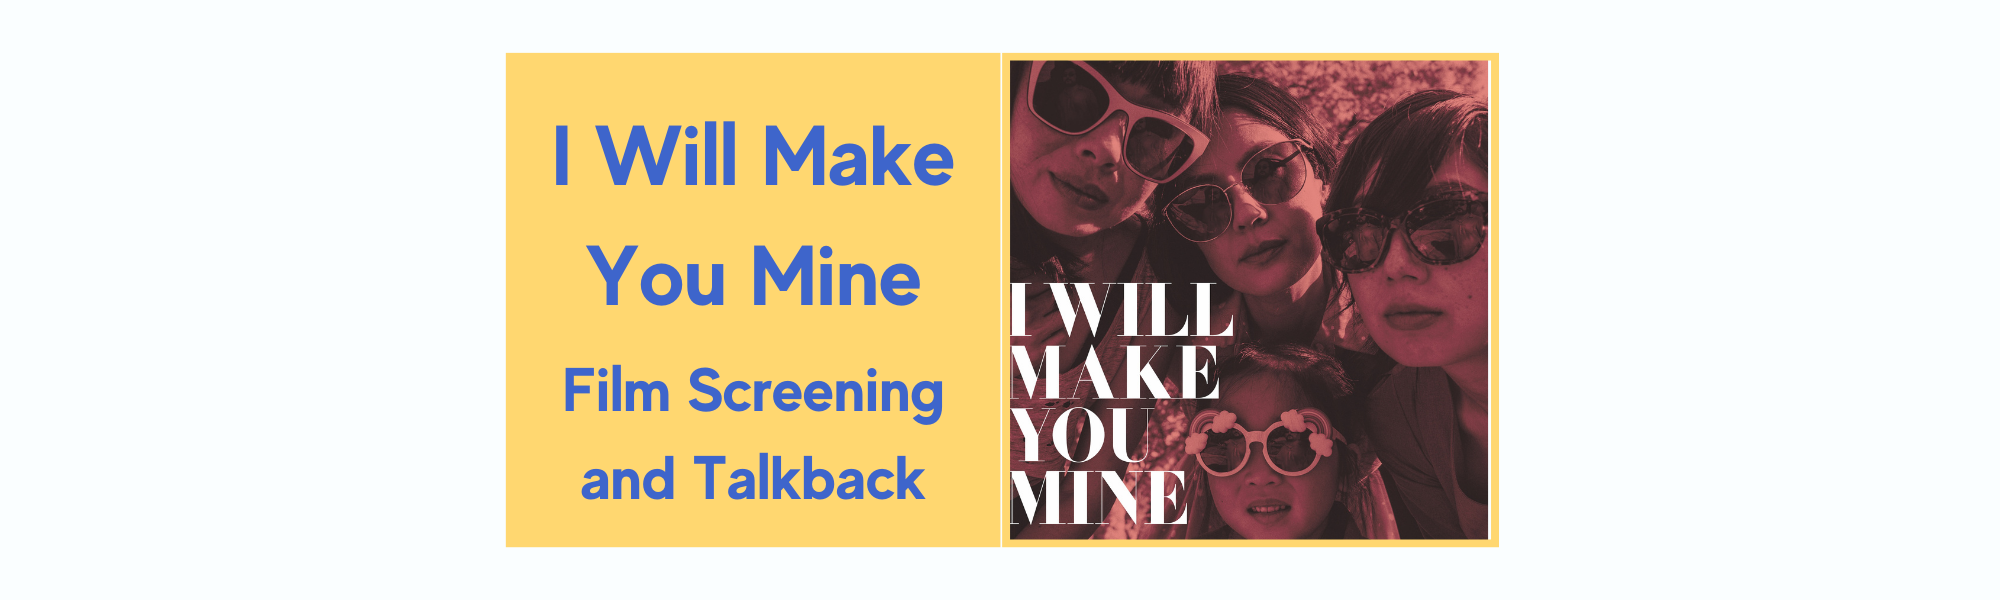 I-Will-Make-You-Mine-Film-Screening-and-Talkback.png